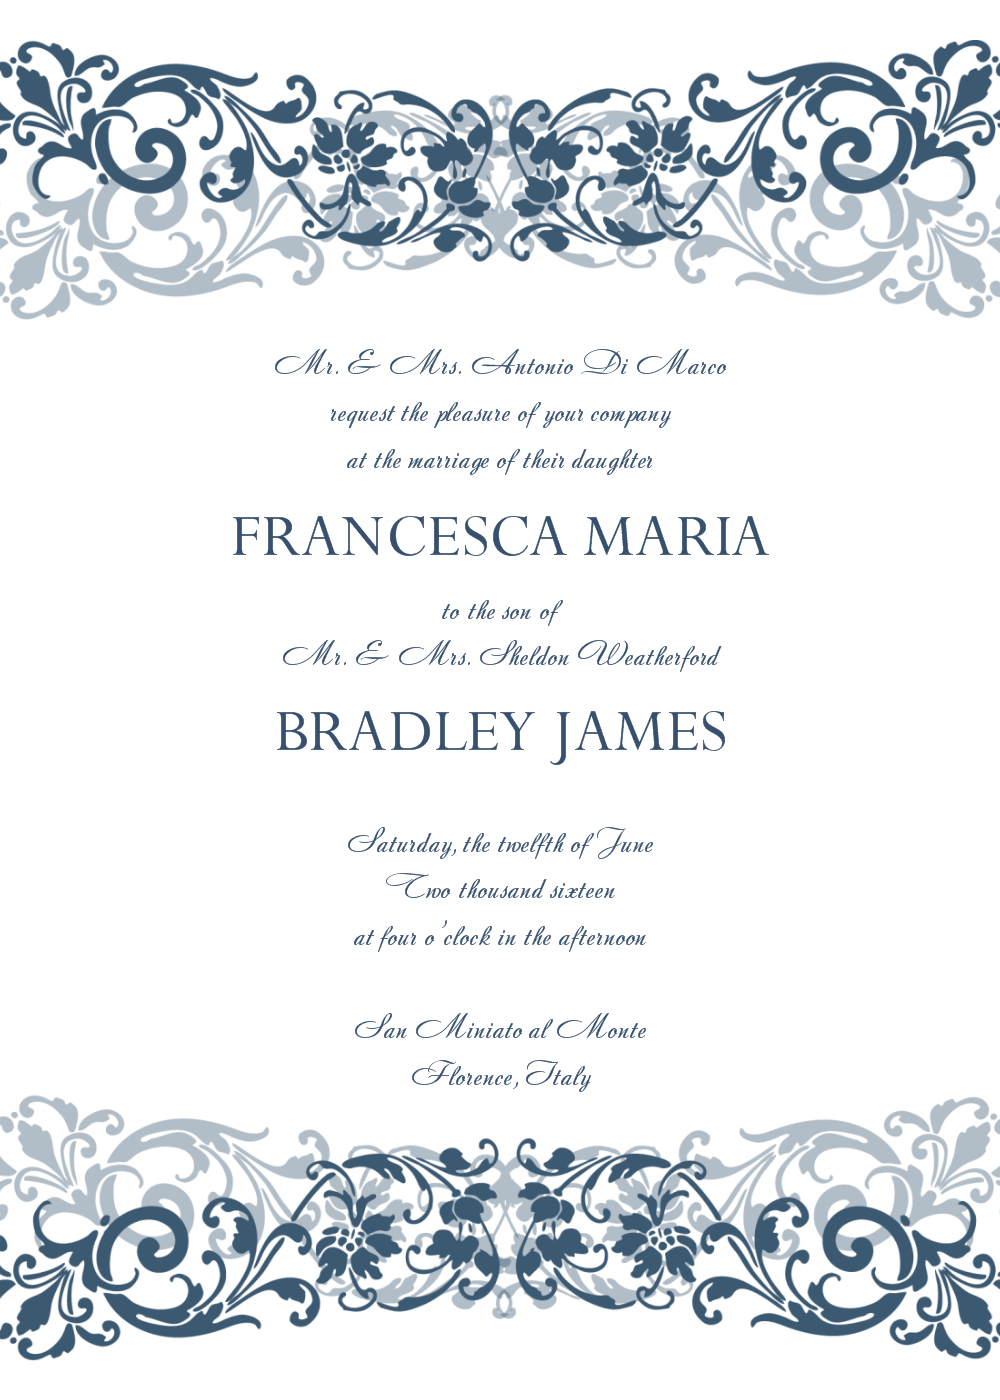 Wedding Invitation Templates | Invitation | Pinterest | Free Wedding - Free Printable Wedding Invitations